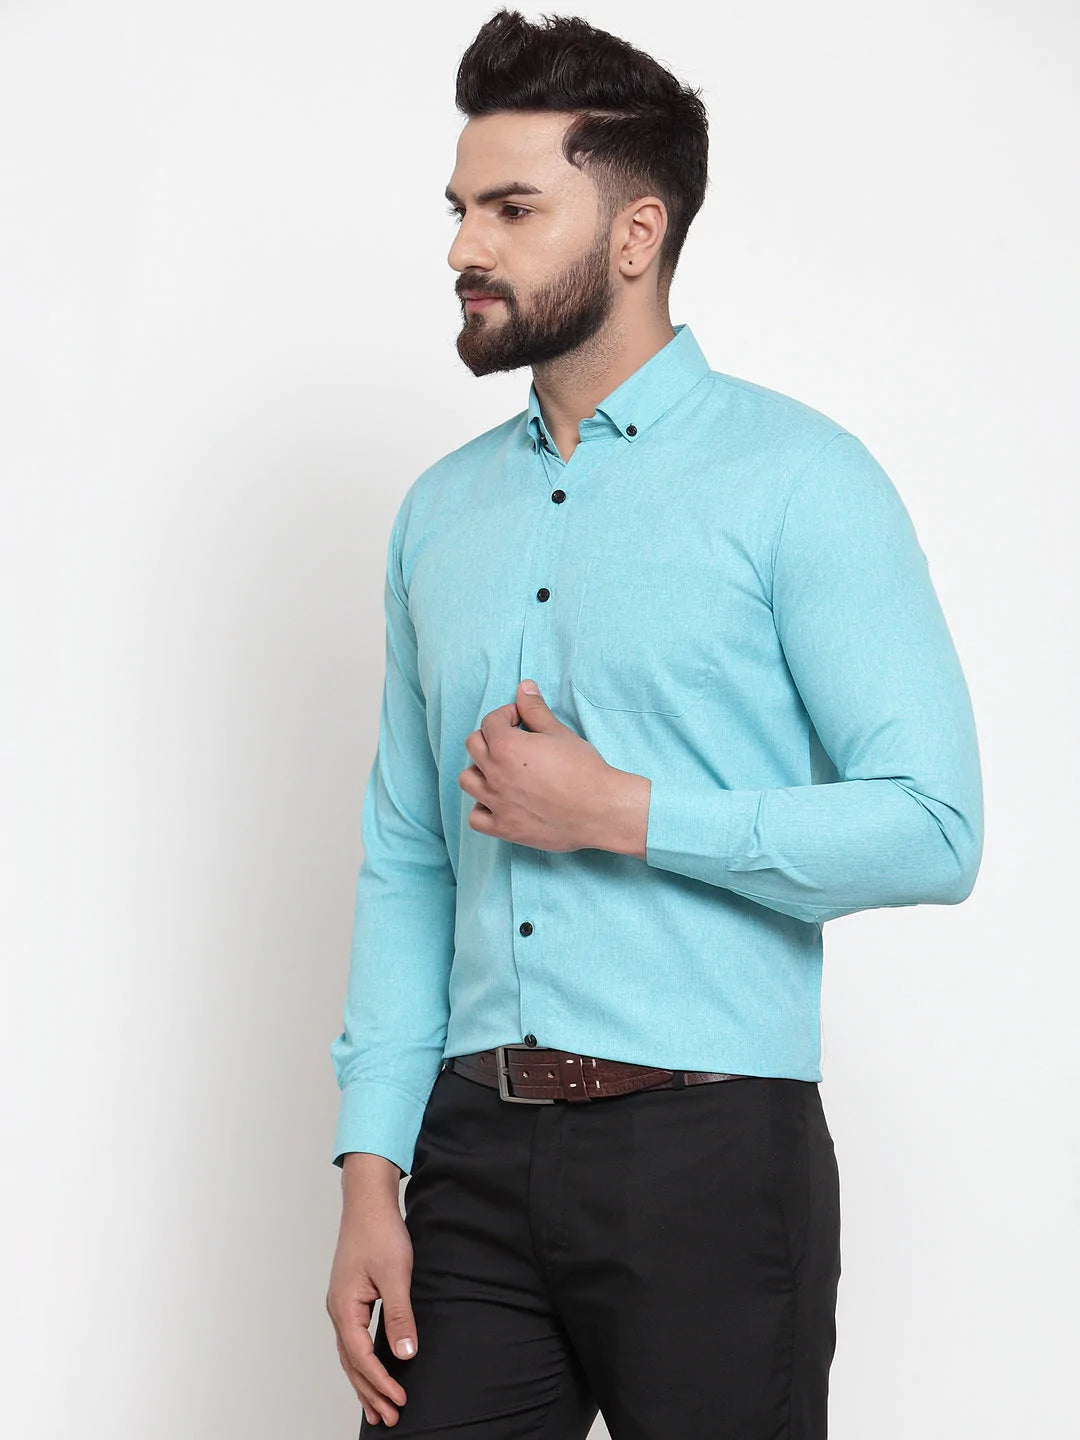 Jainish Green Men's Cotton Solid Button Down Formal Shirts ( SF 734Aqua )